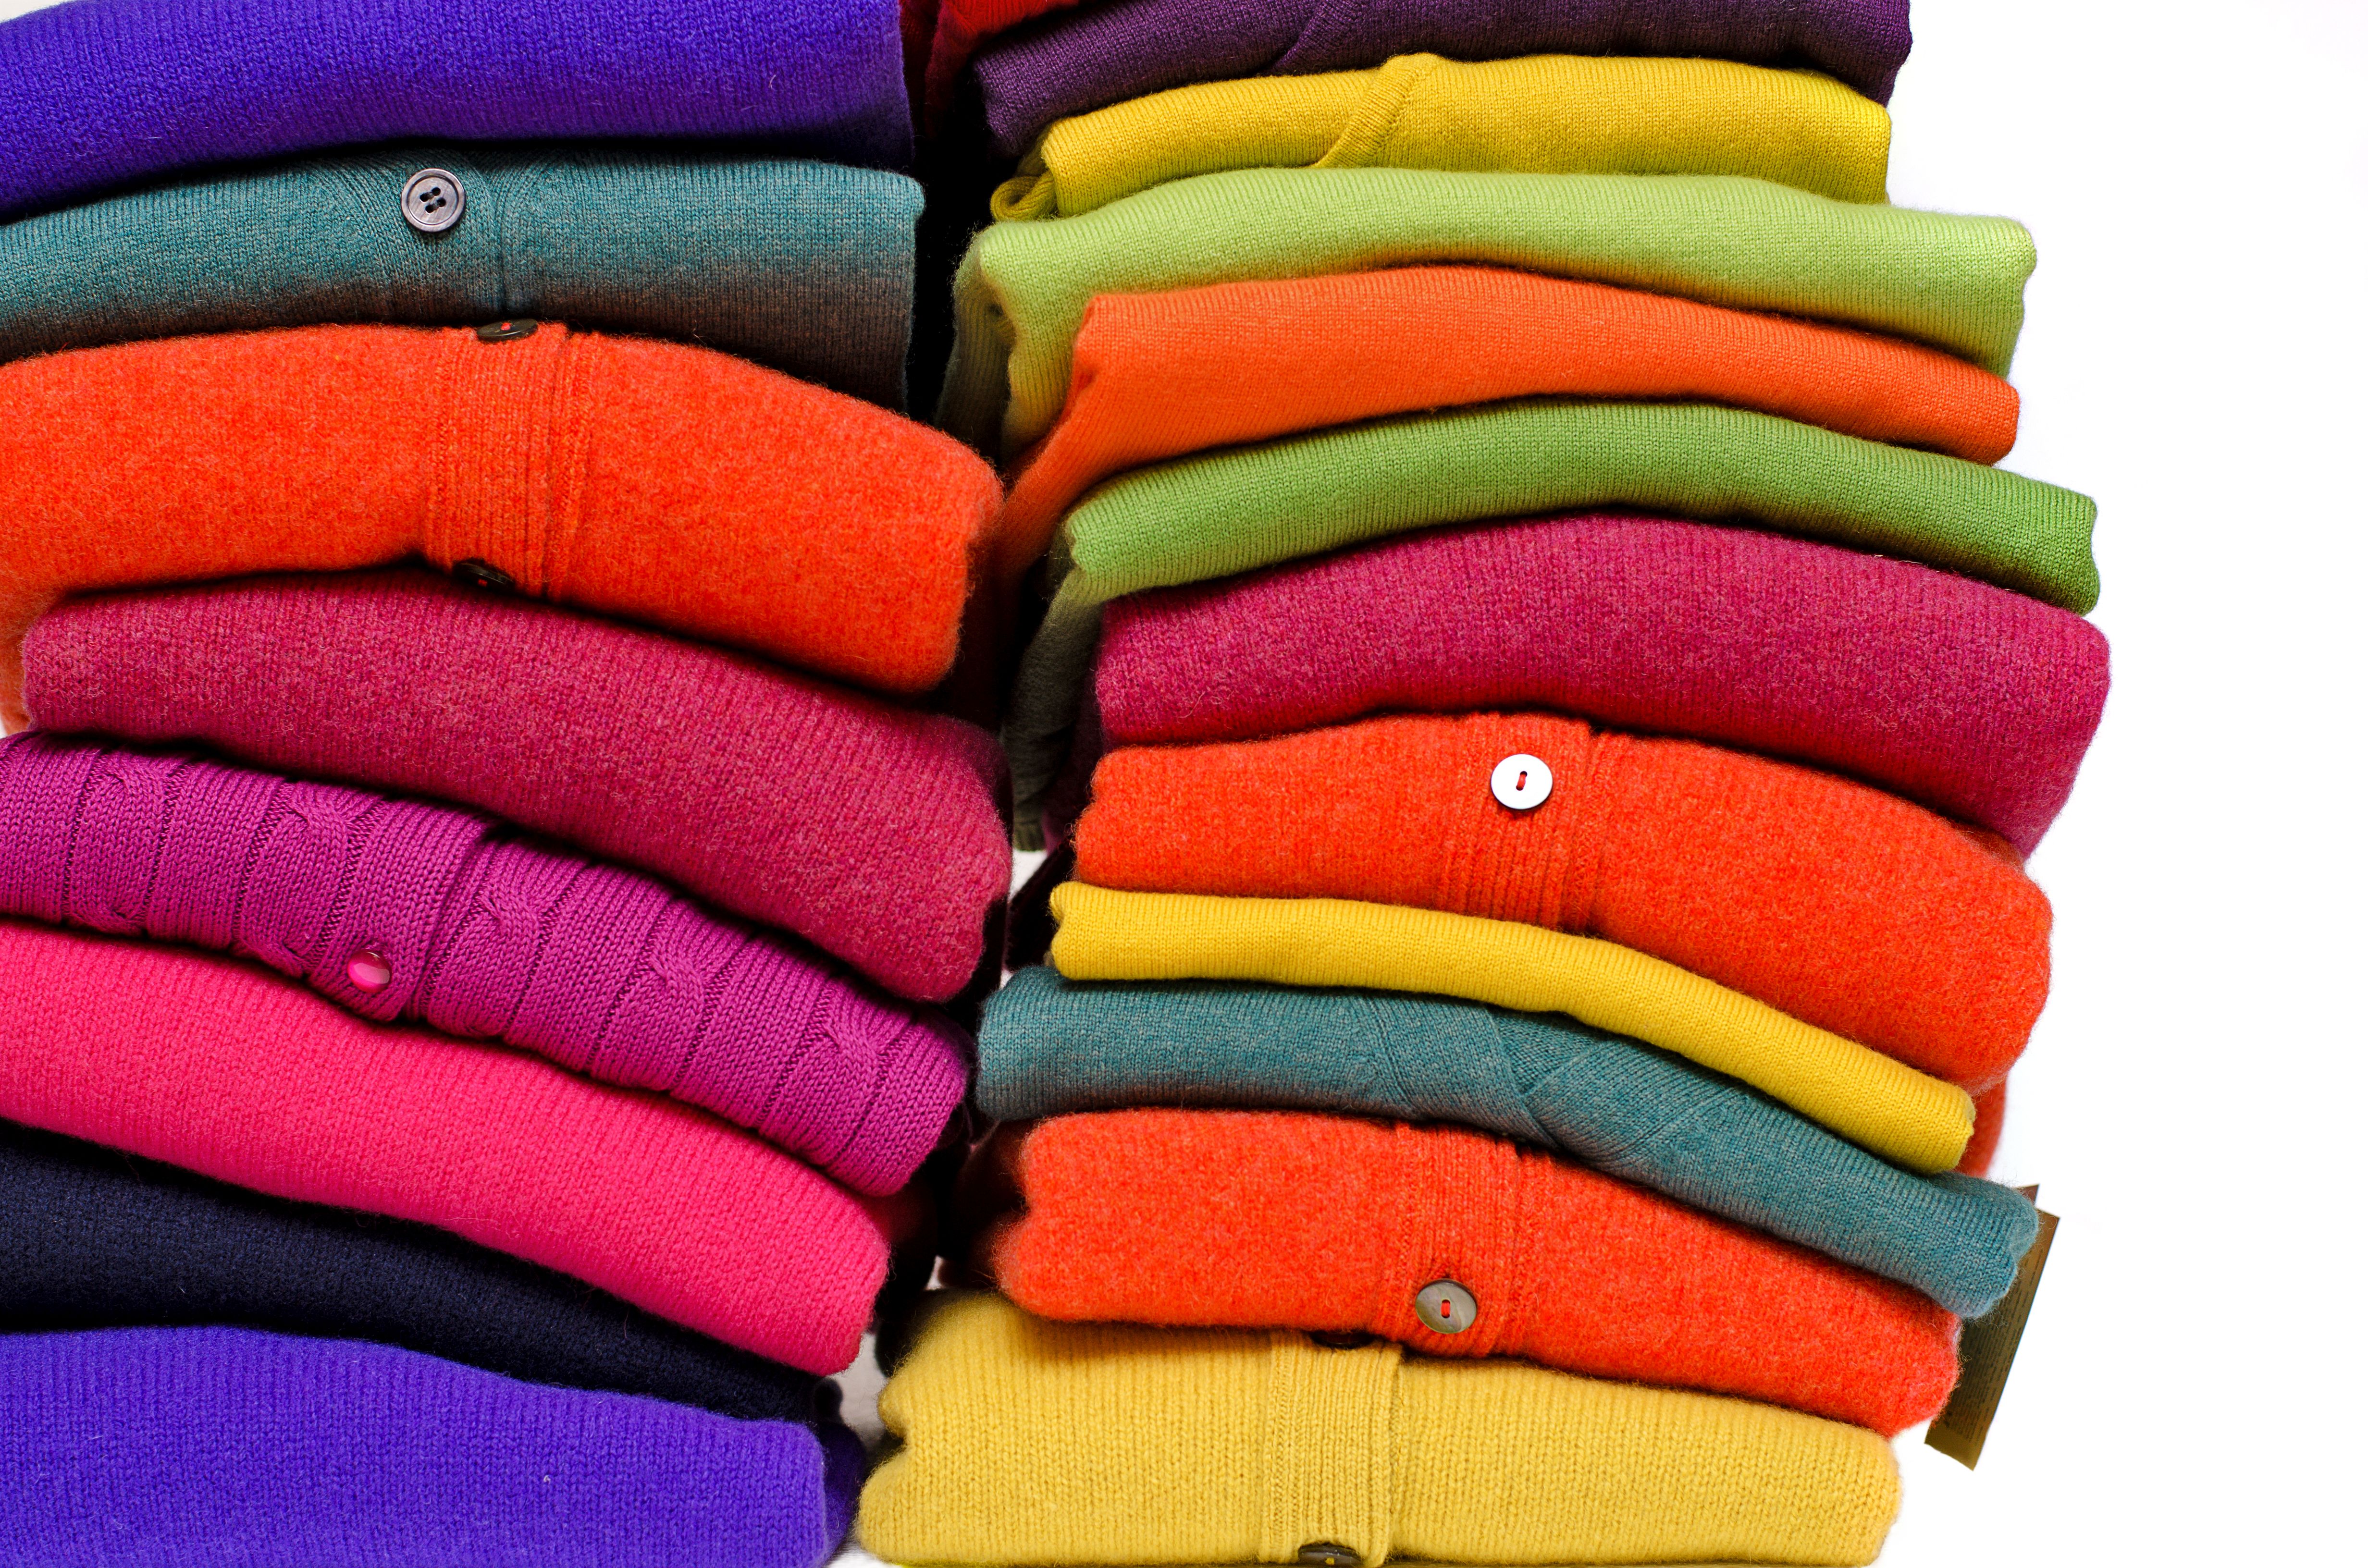 Merino wool clothing improves atopic dermatitis, studies find